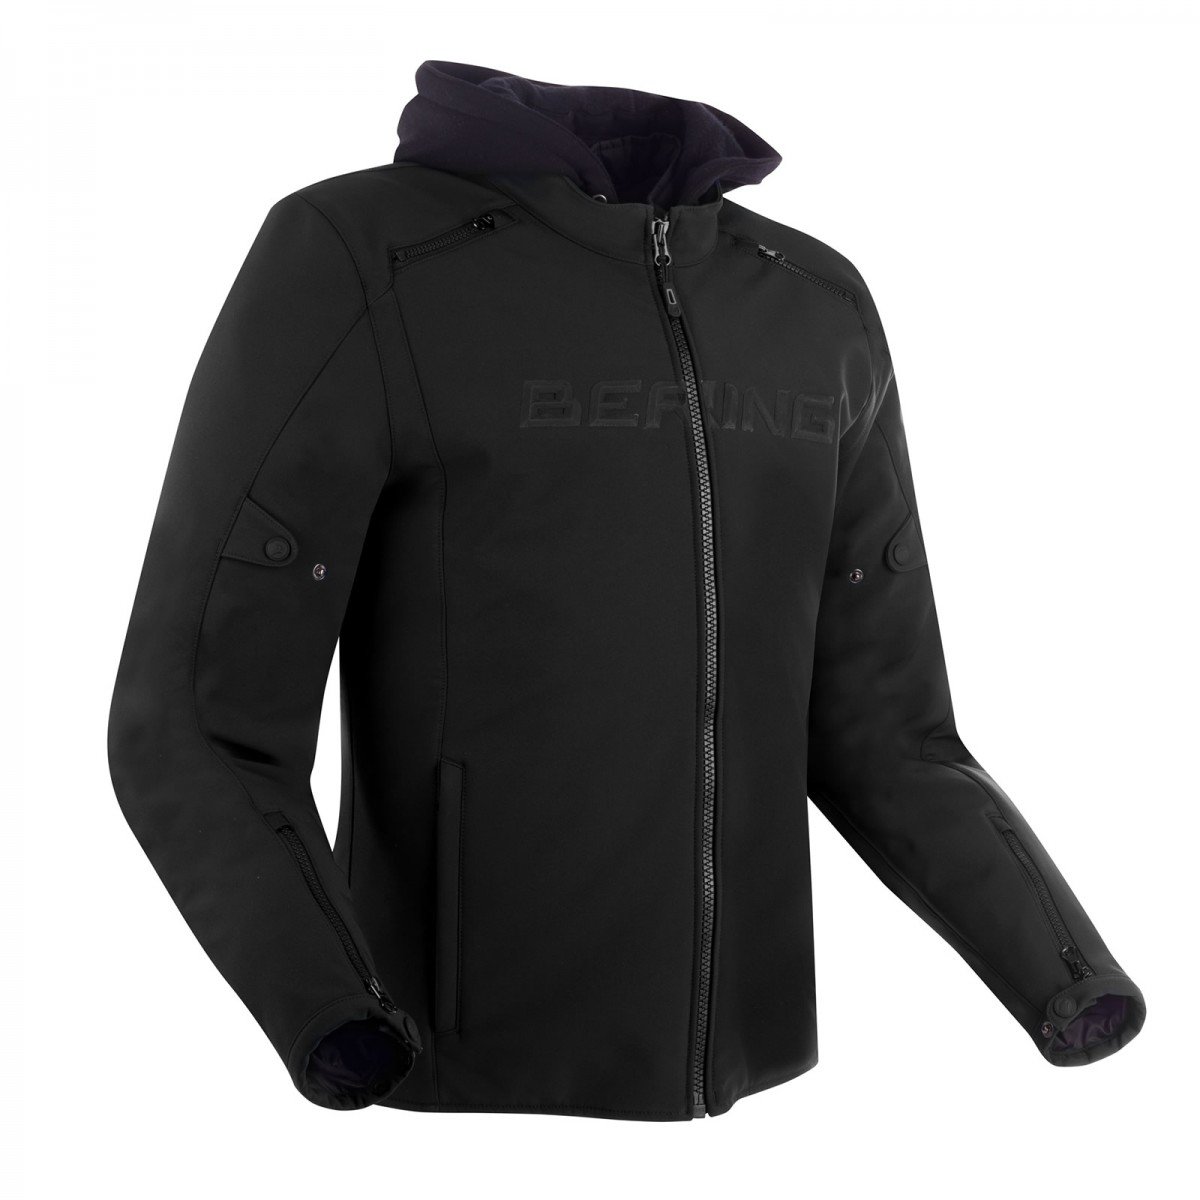 Image of Bering Elite Jacket Black Size S ID 3660815170182